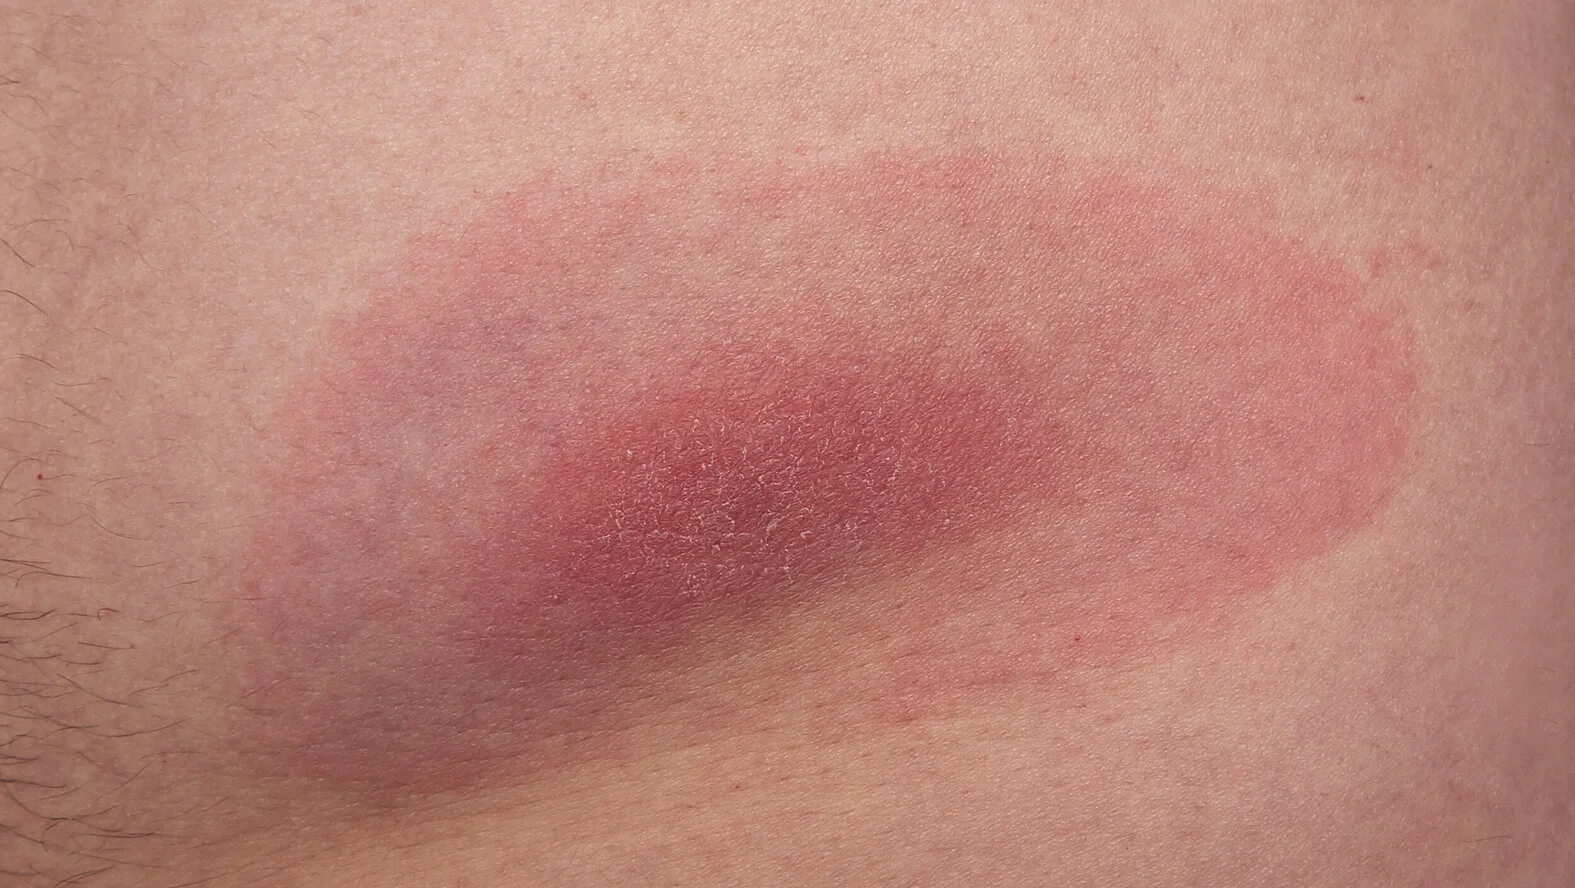 Lyme-Borreliose, typische ringförmige Hautrötung